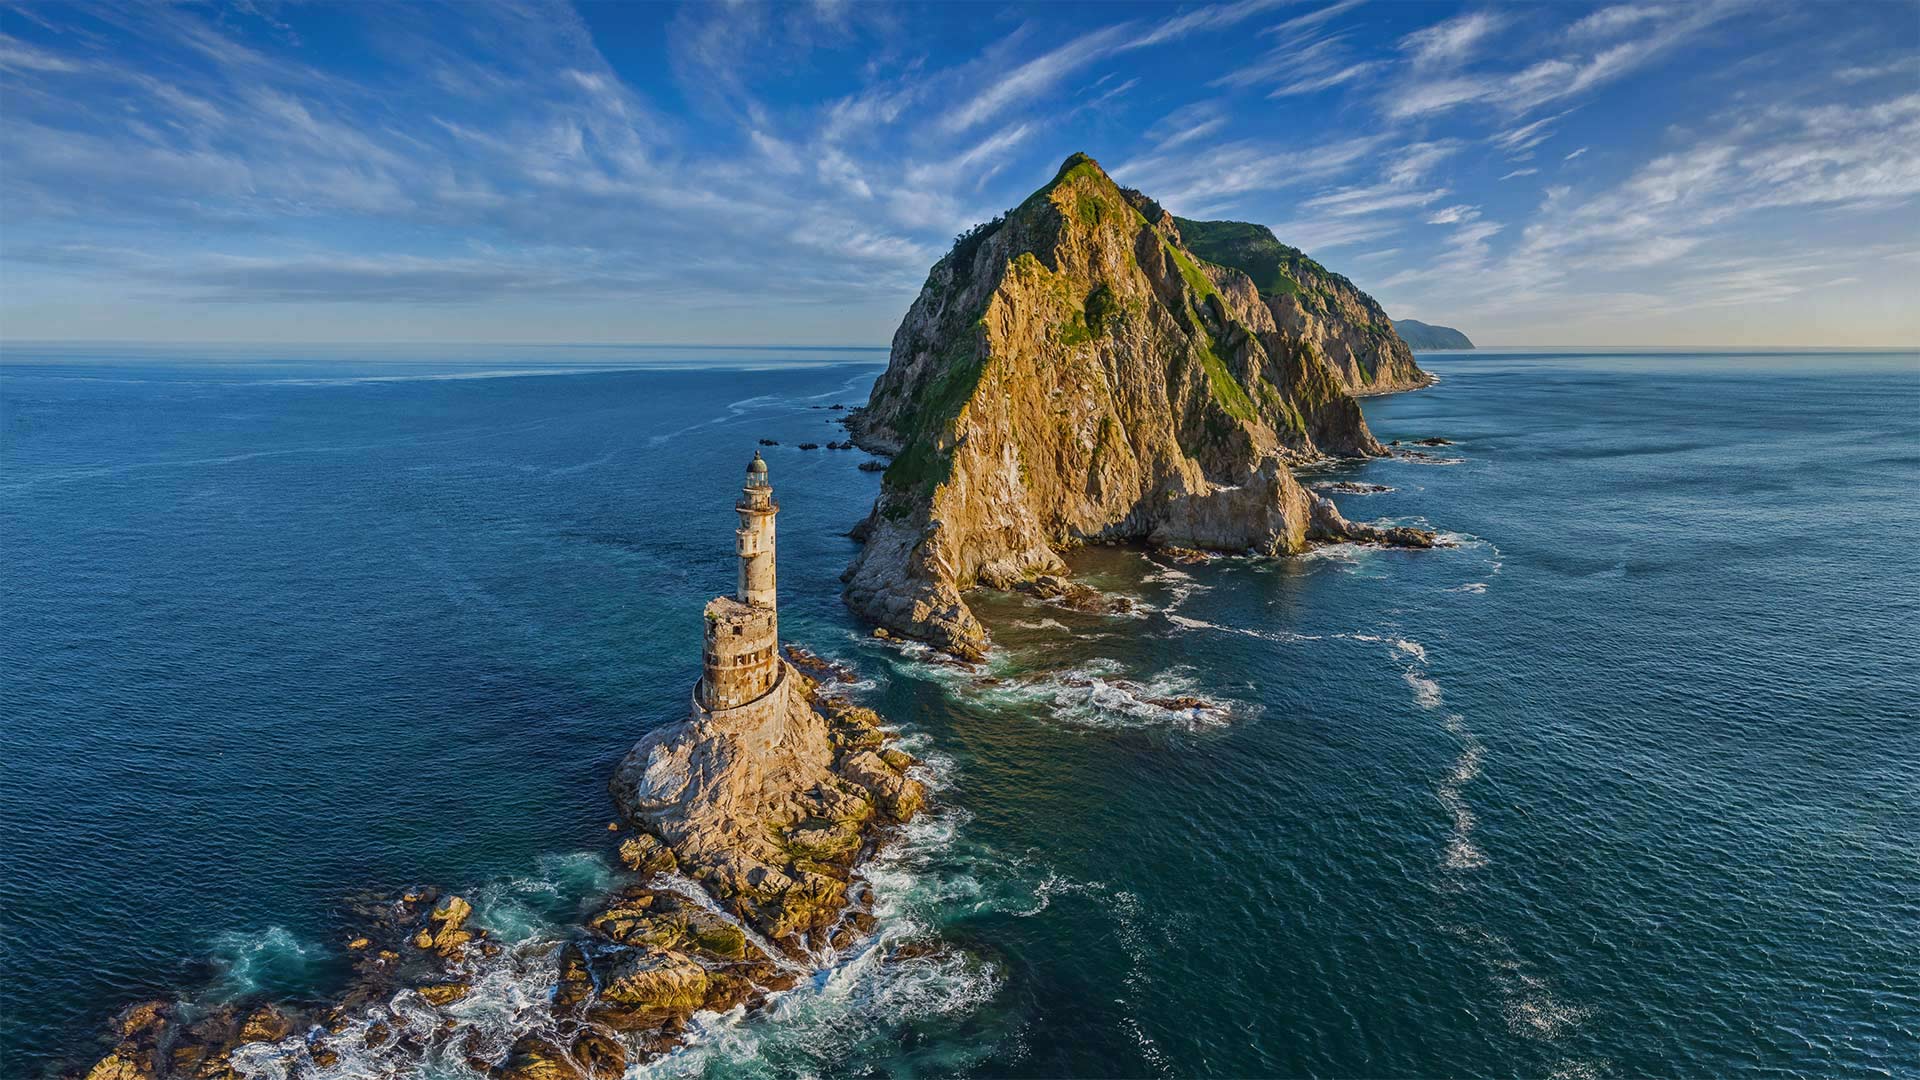 General 1920x1080 landscape nature sea island rocks lighthouse sky Russia Bing